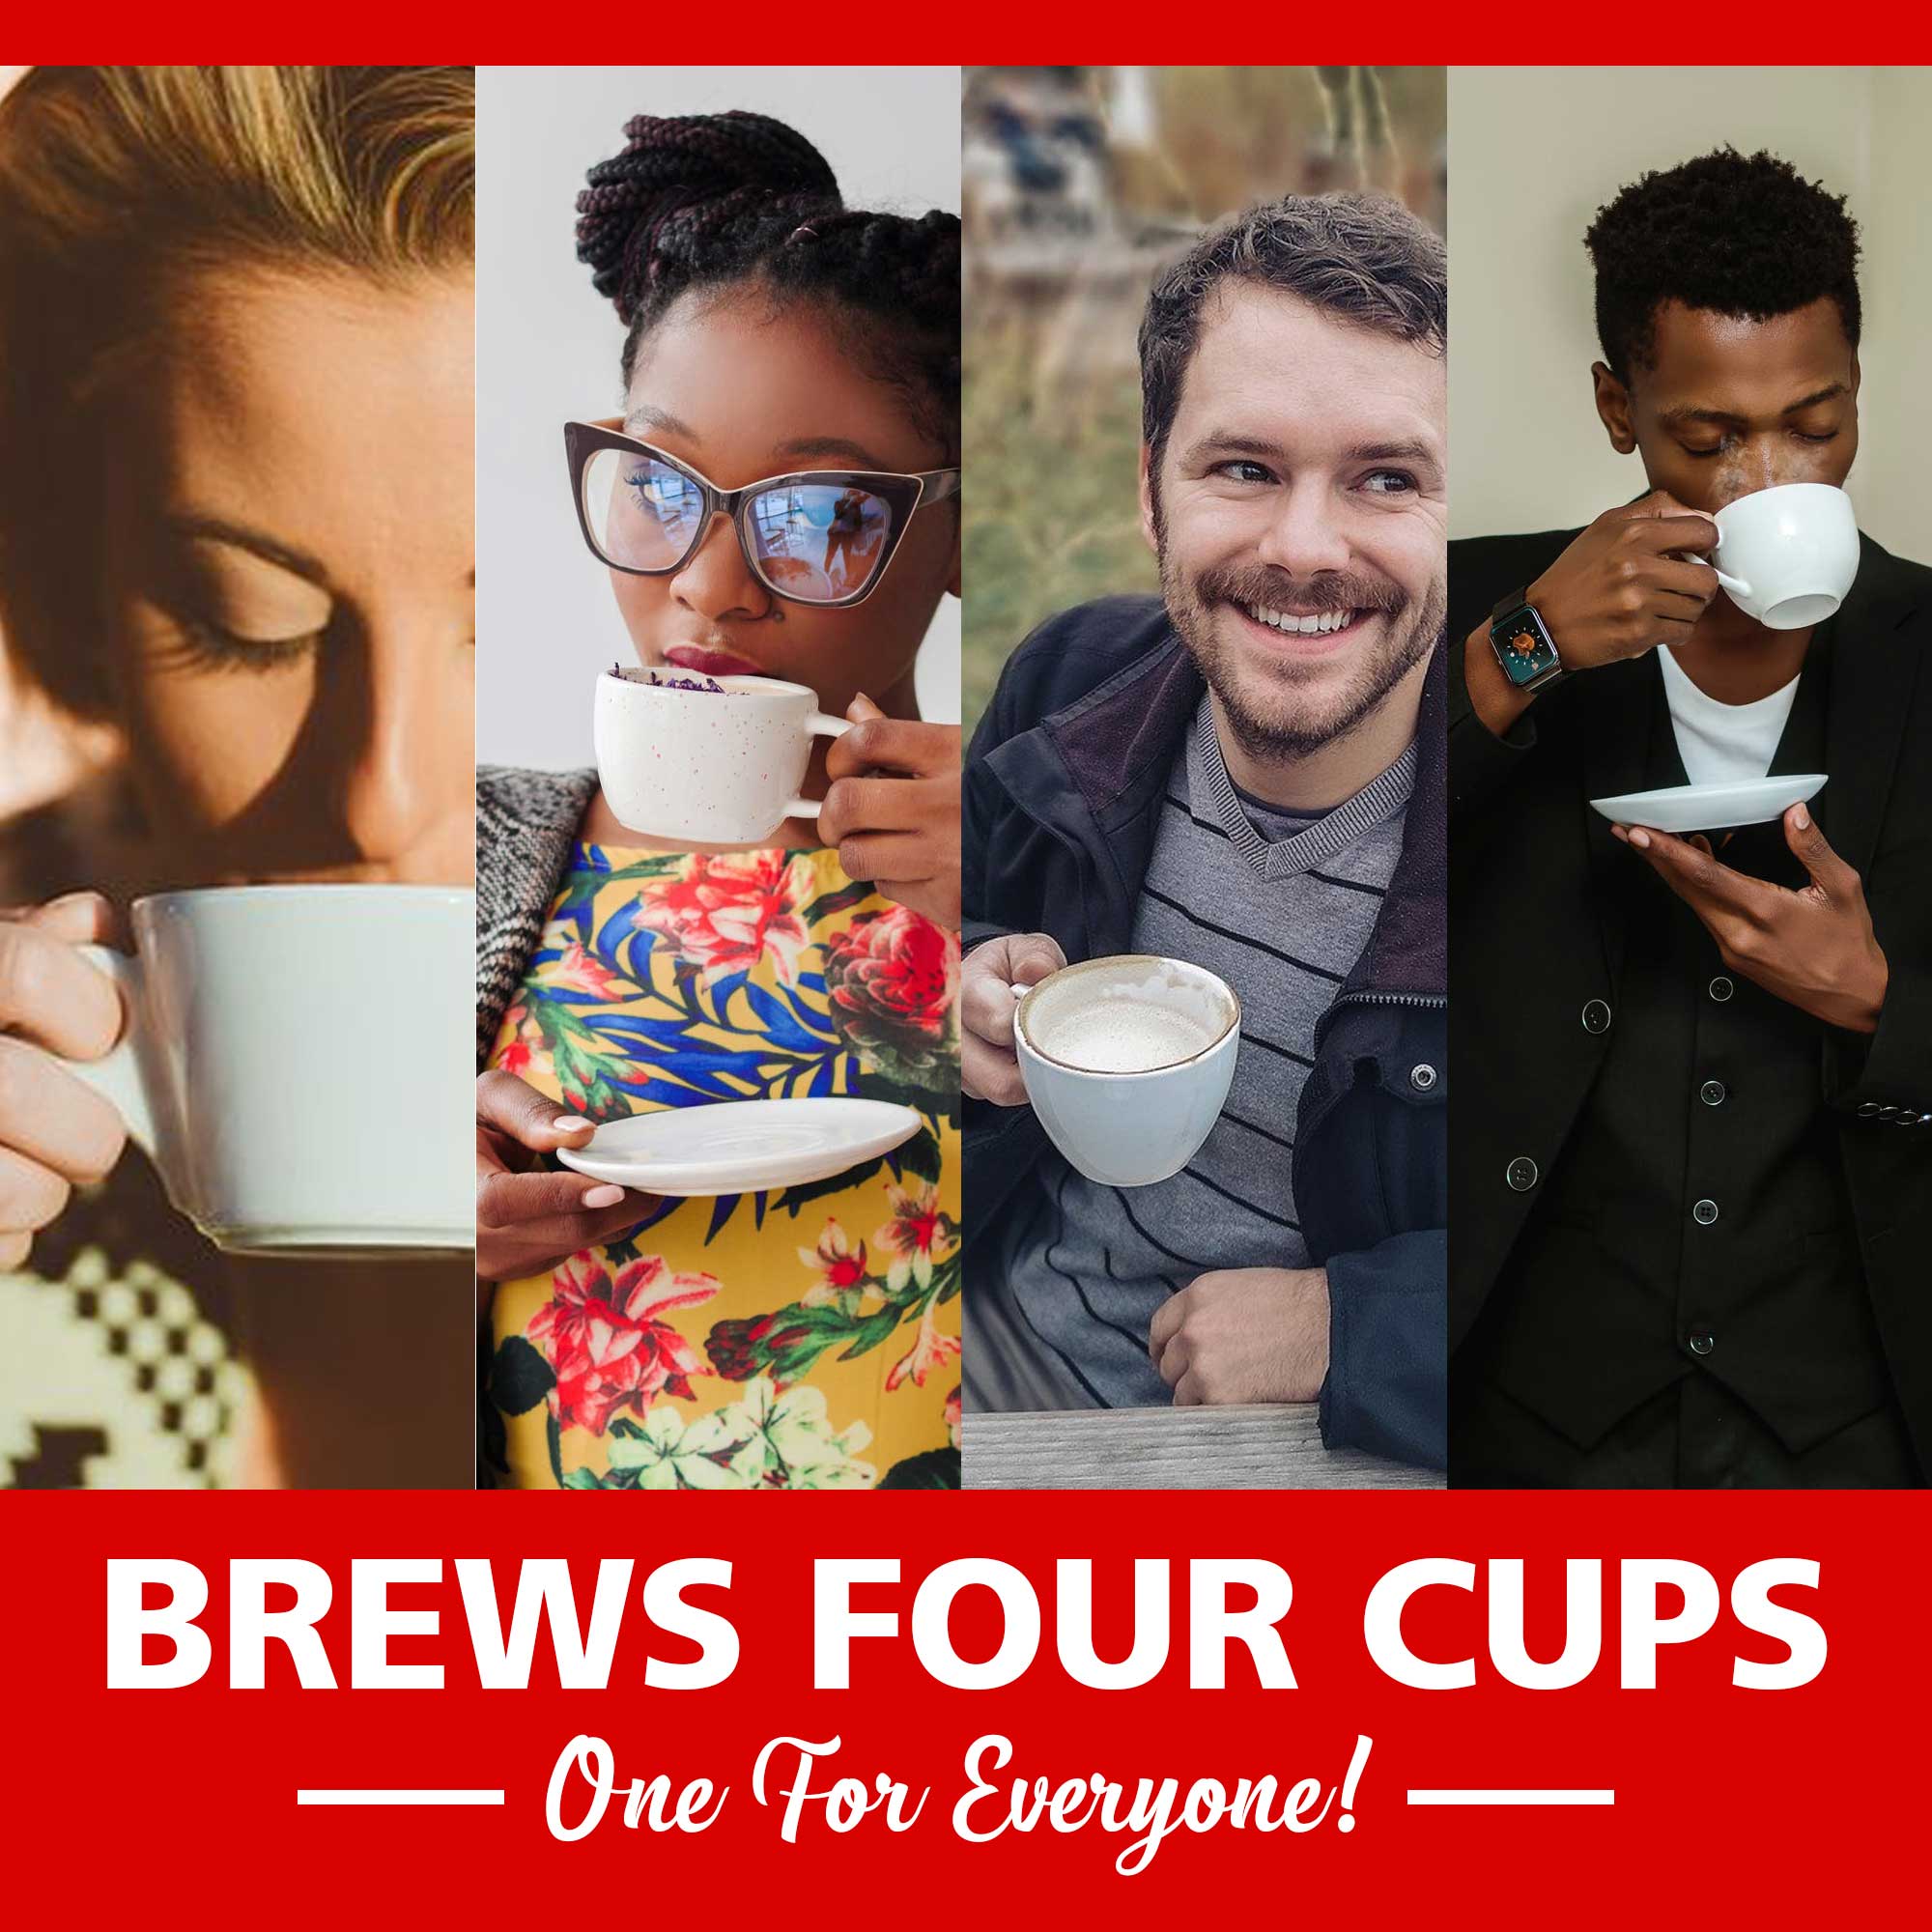 4 Cup Coffee Maker – DOMINION